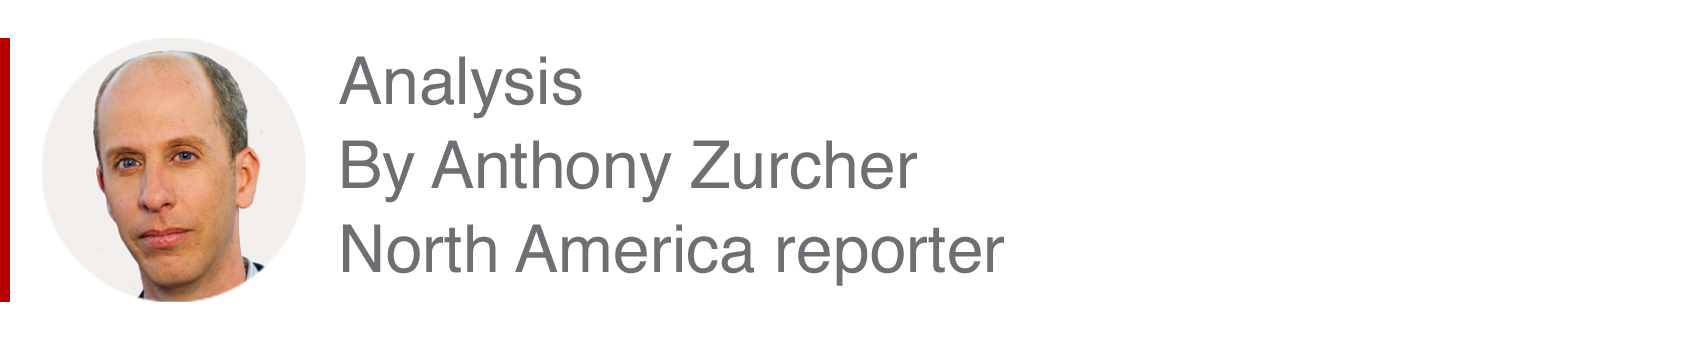 Cuadro de análisis de Anthony Zurcher, reportero de América del Norte